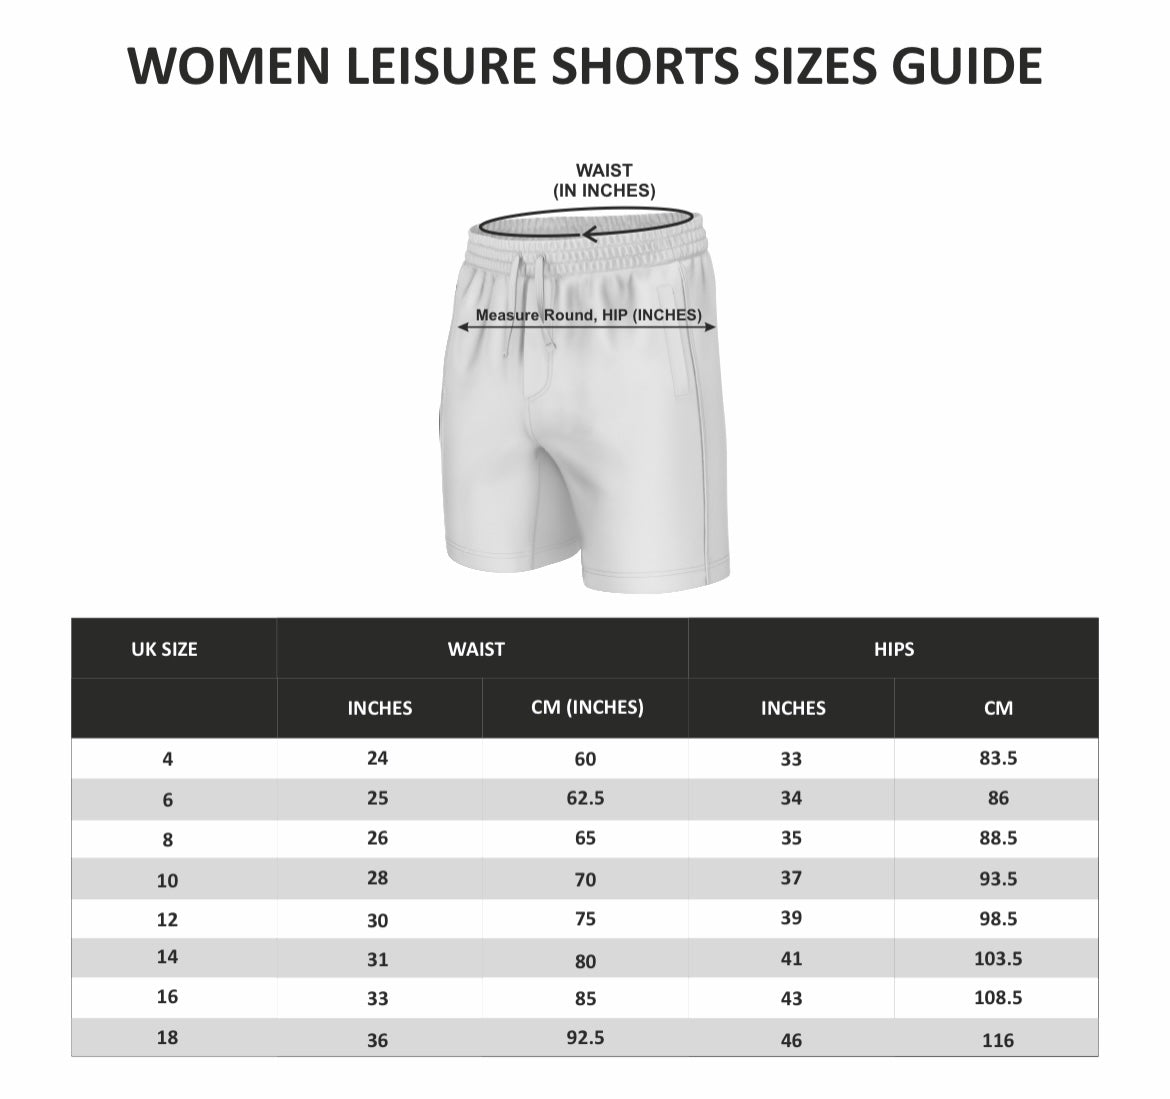 Falcons Club Leisure shorts